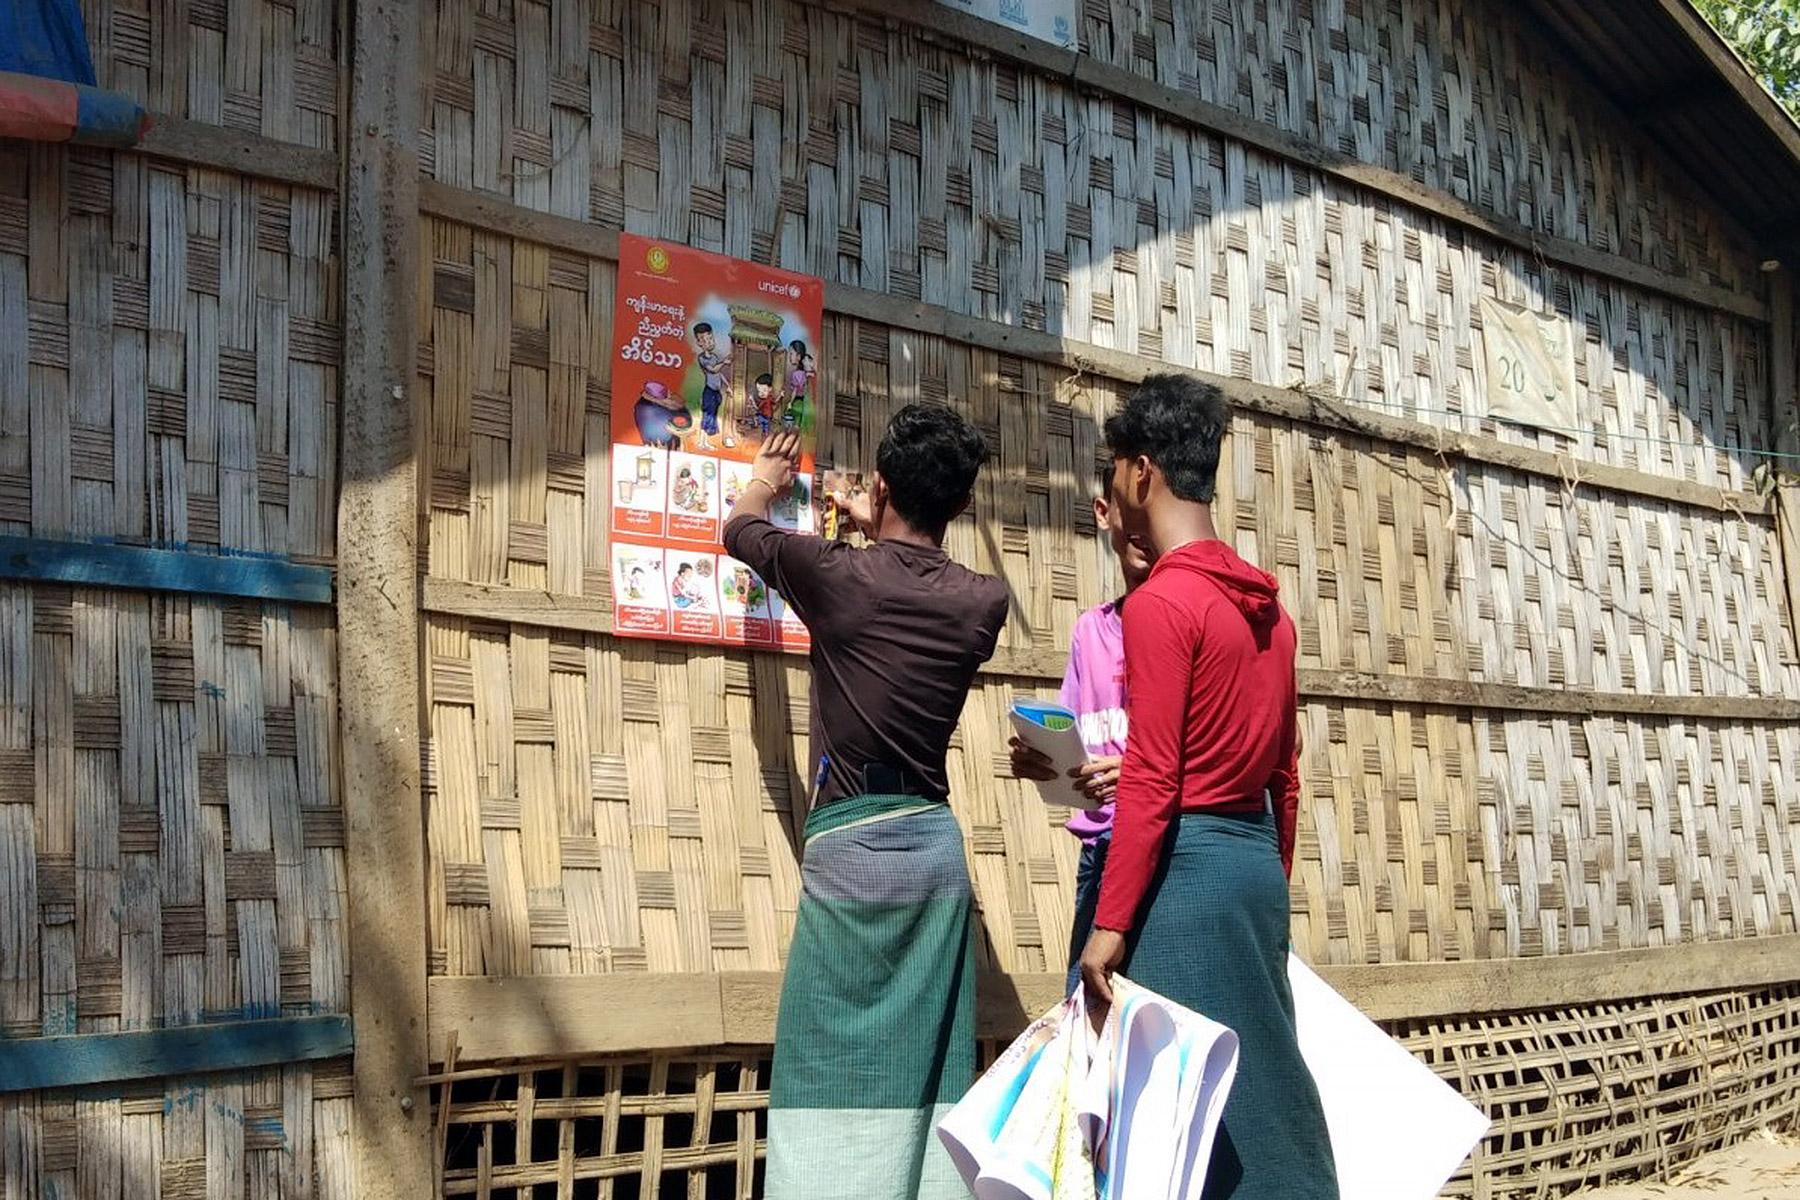 LWF is working in Myanmarâs Rakhine, Chin and Kayin States to support awareness raising on COVID-19 prevention. Here, posters are distributed in local languages with information on hygiene and other measures to stop the spread of infection. Photo: LWF Myanmar 